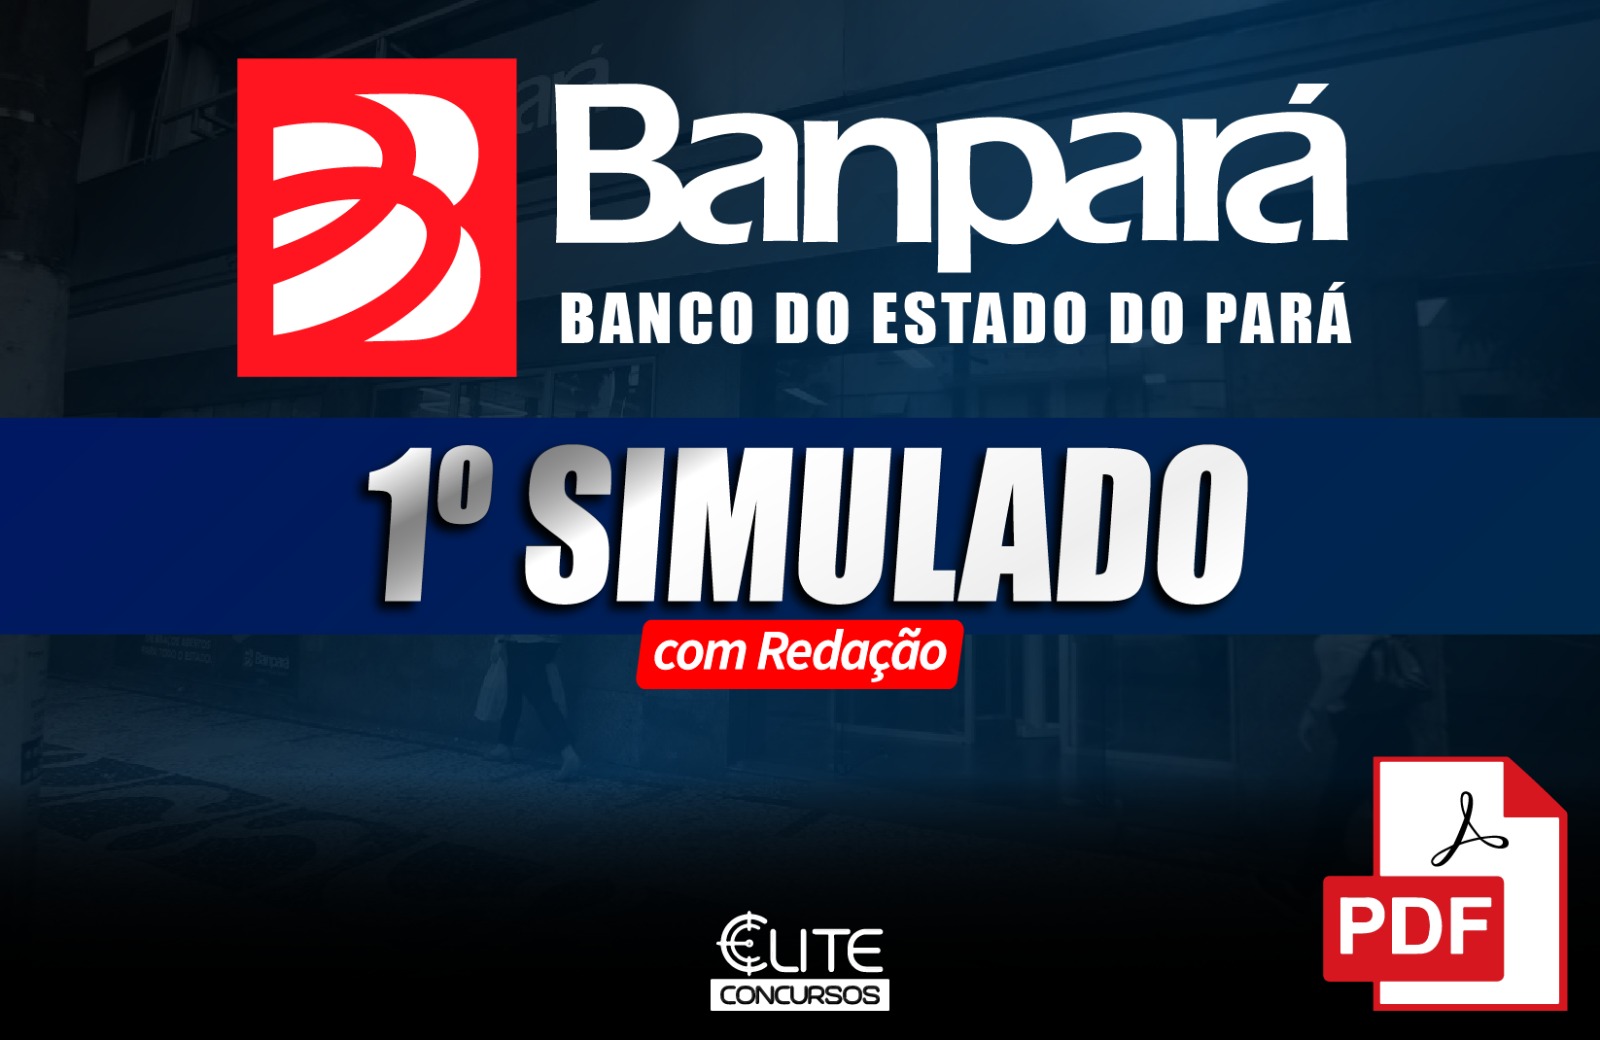 1 SIMULADO BANPAR - EM PDF - 25/08